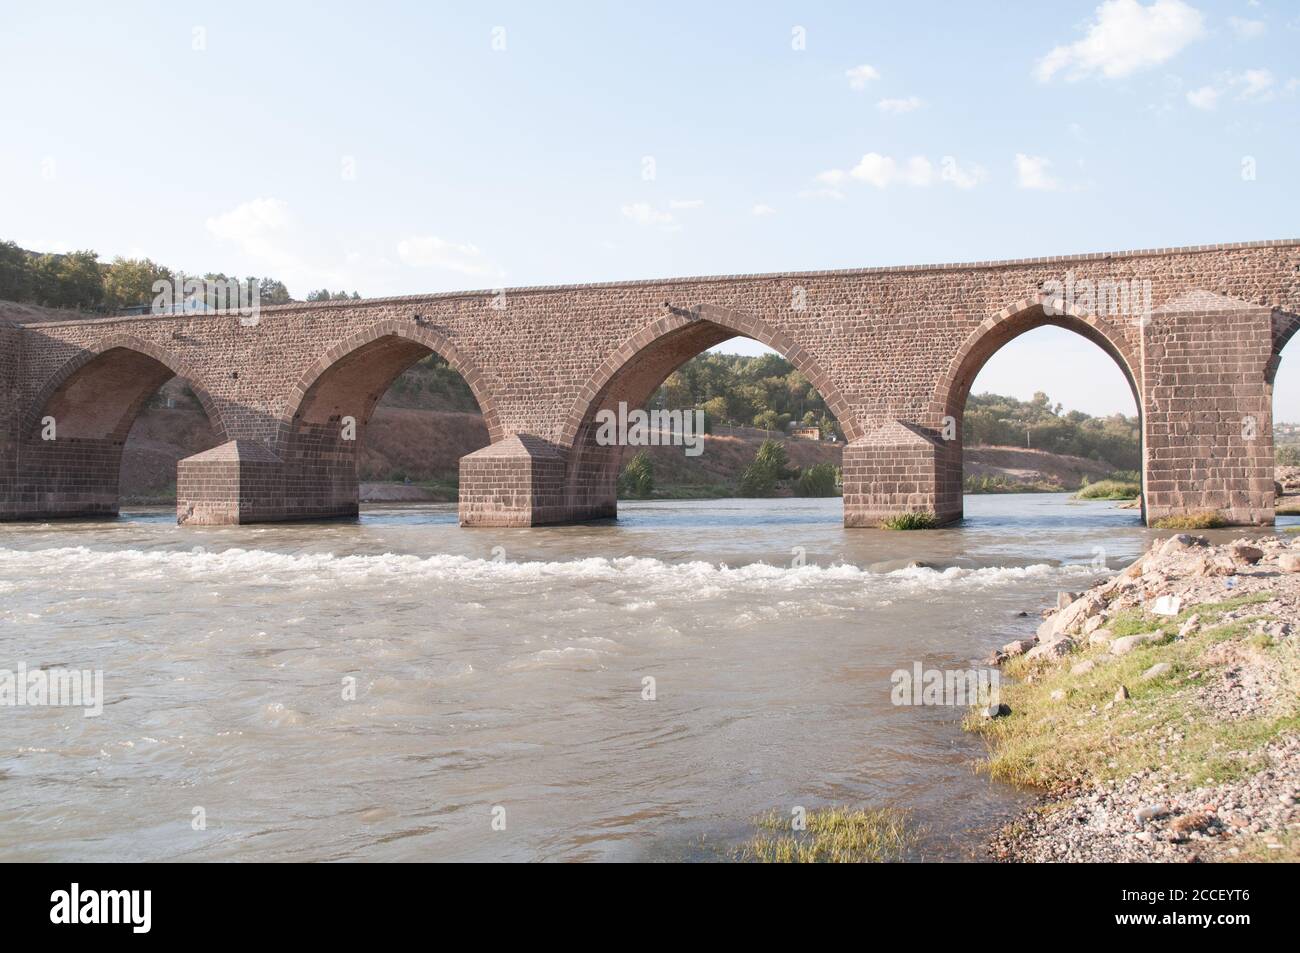 An old 11th century Seljuk stone bridge across the Tigris River, on the edge of the city of Diyabakir, in eastern Anatolia, southeastern Turkey. Stock Photo